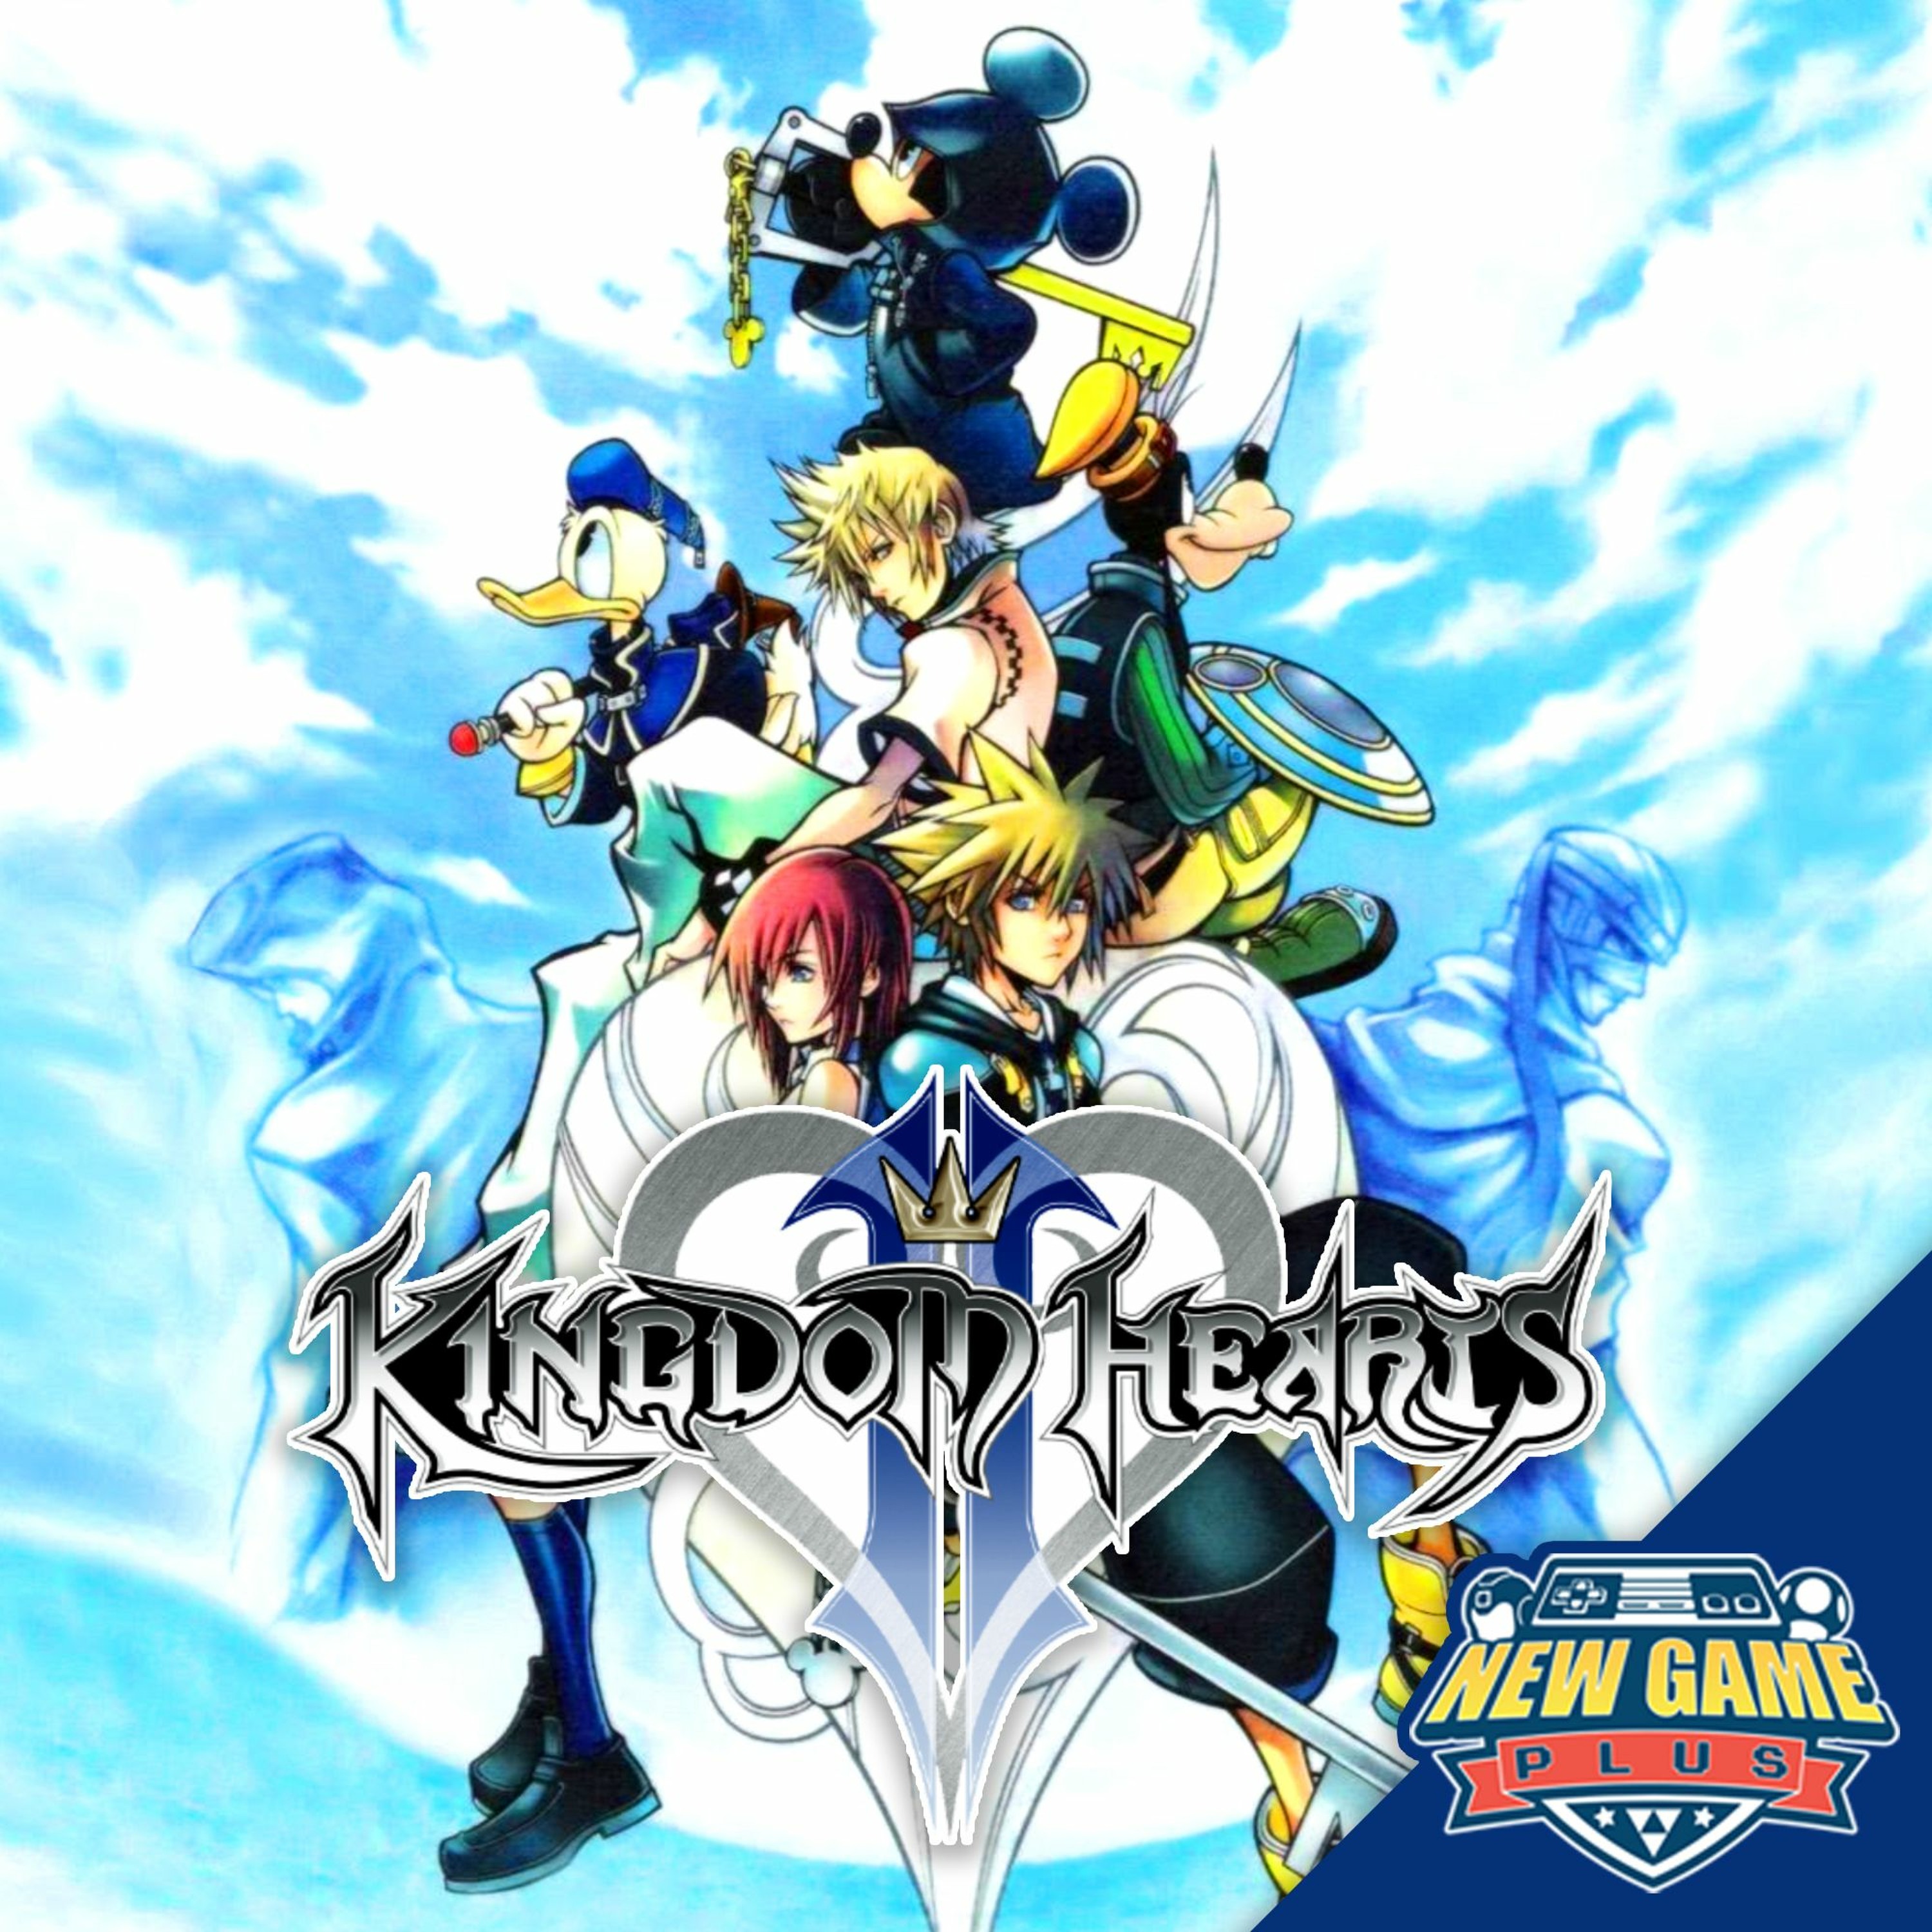 Episode 413: Kingdom Hearts II